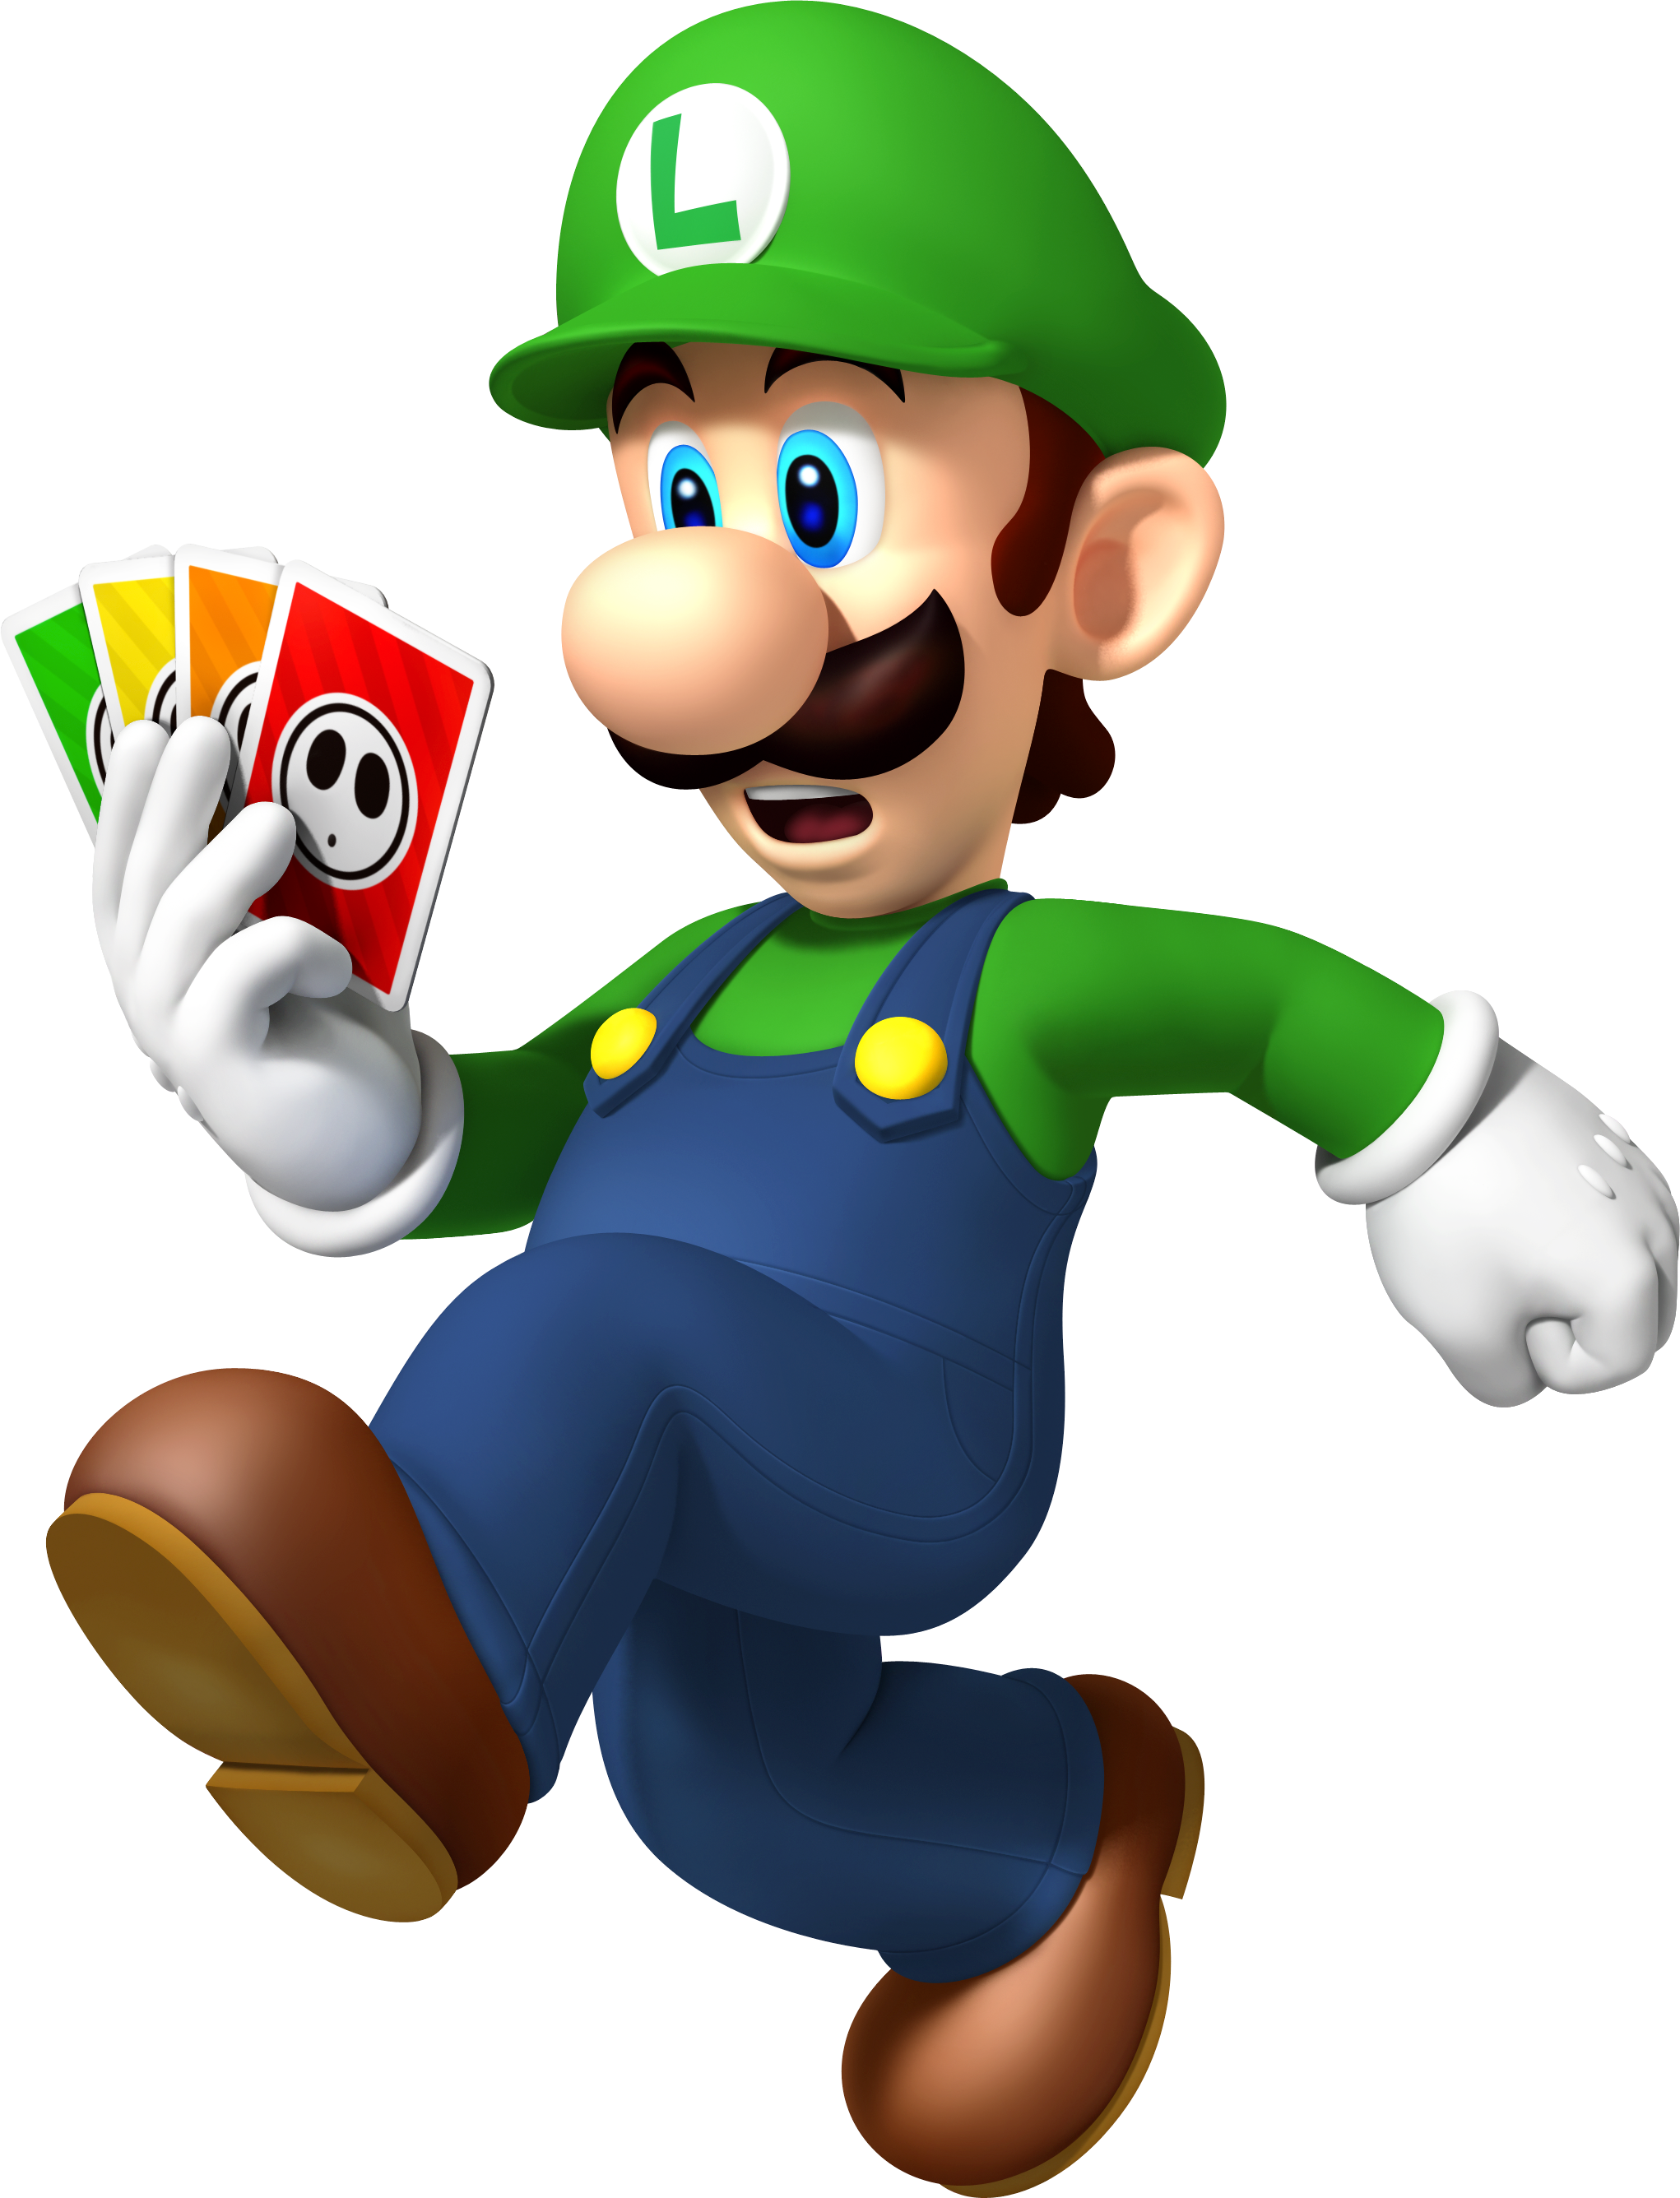 File:Luigi Artwork - MPIT.png - Super Mario Wiki, the Mario encyclopedia